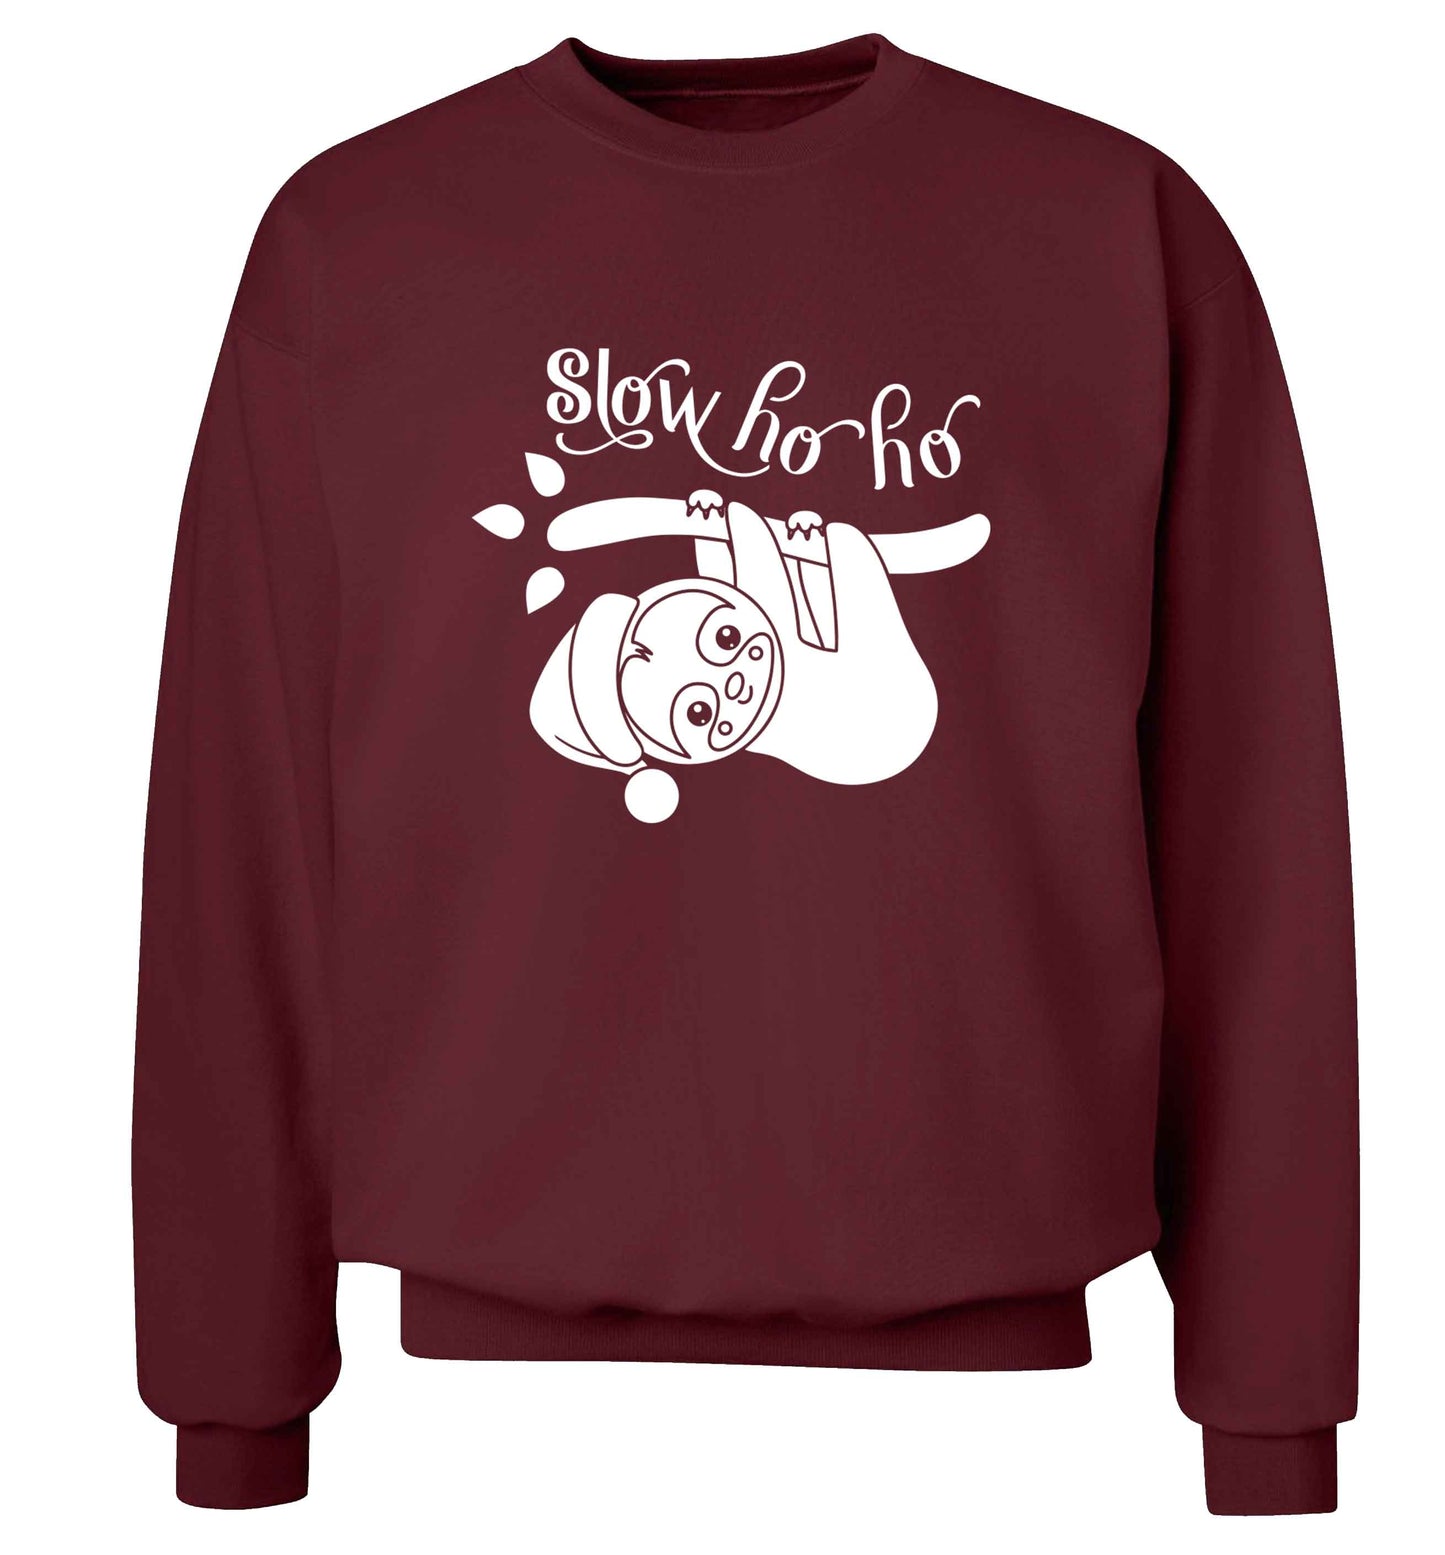 Slow Ho Ho adult's unisex maroon sweater 2XL